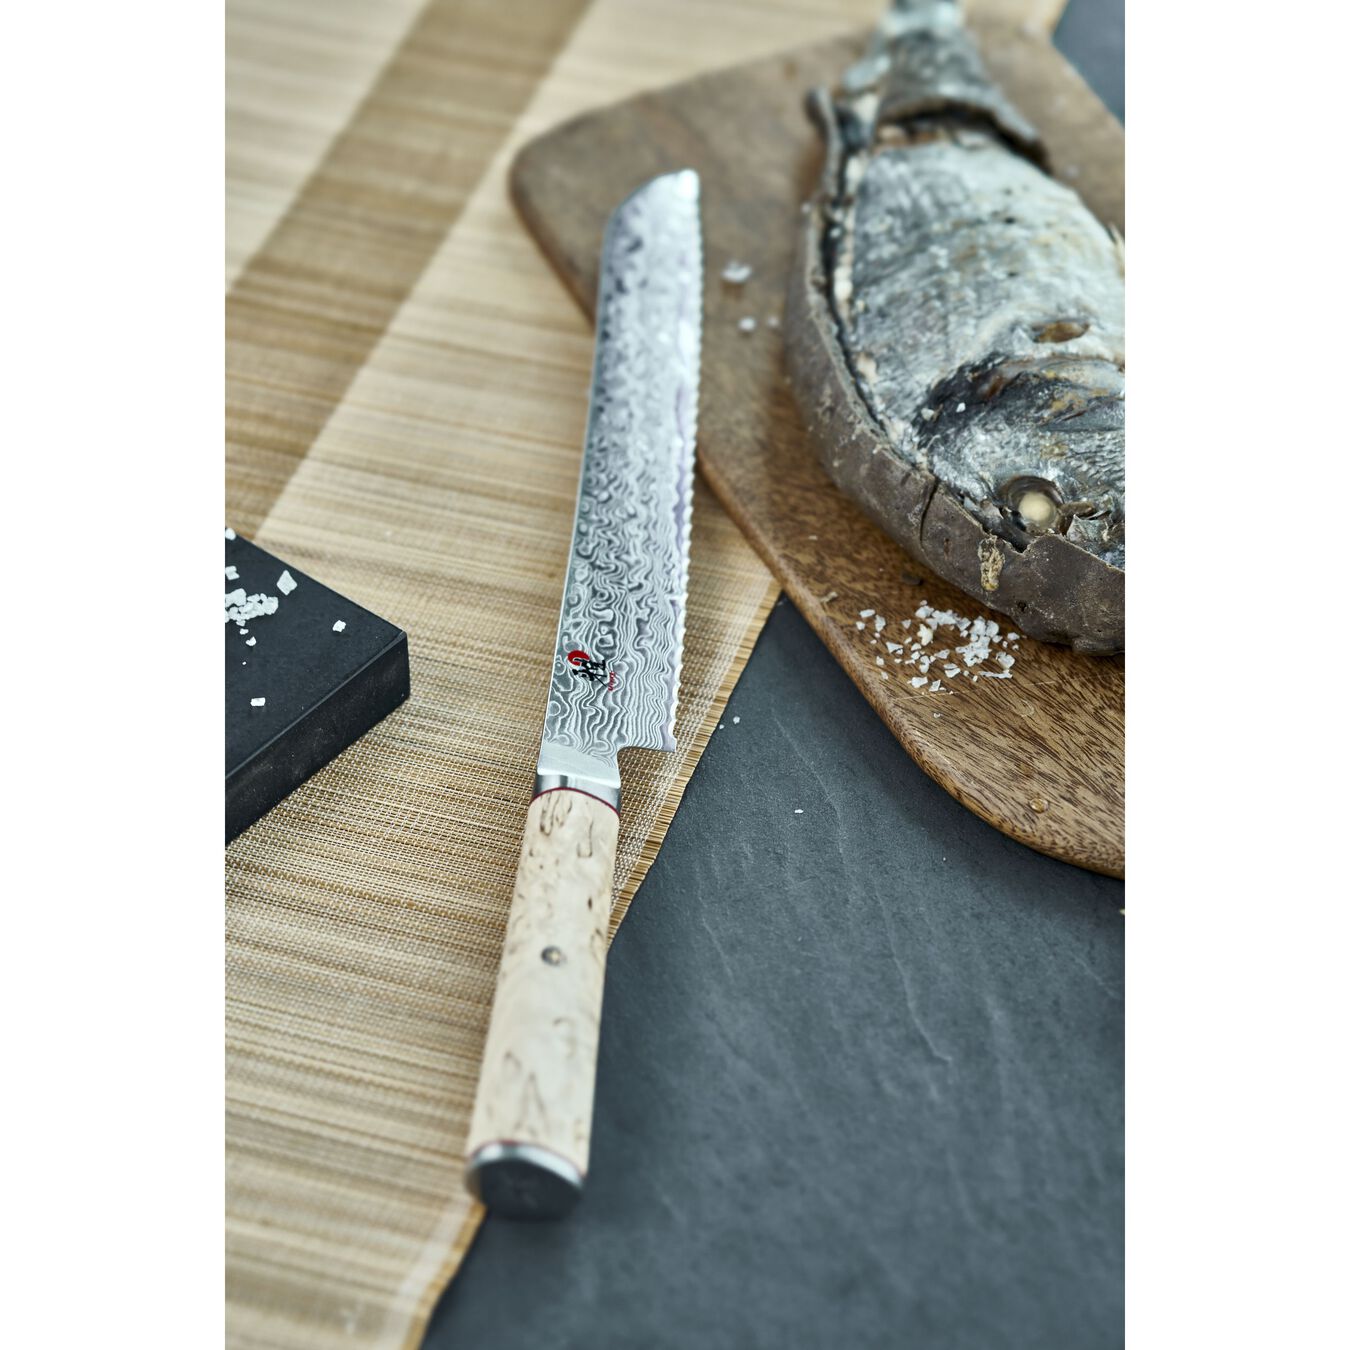 Miyabi 5000 MCD 23cm Bread Knife - 34376-231-0 - The Cotswold Knife Company